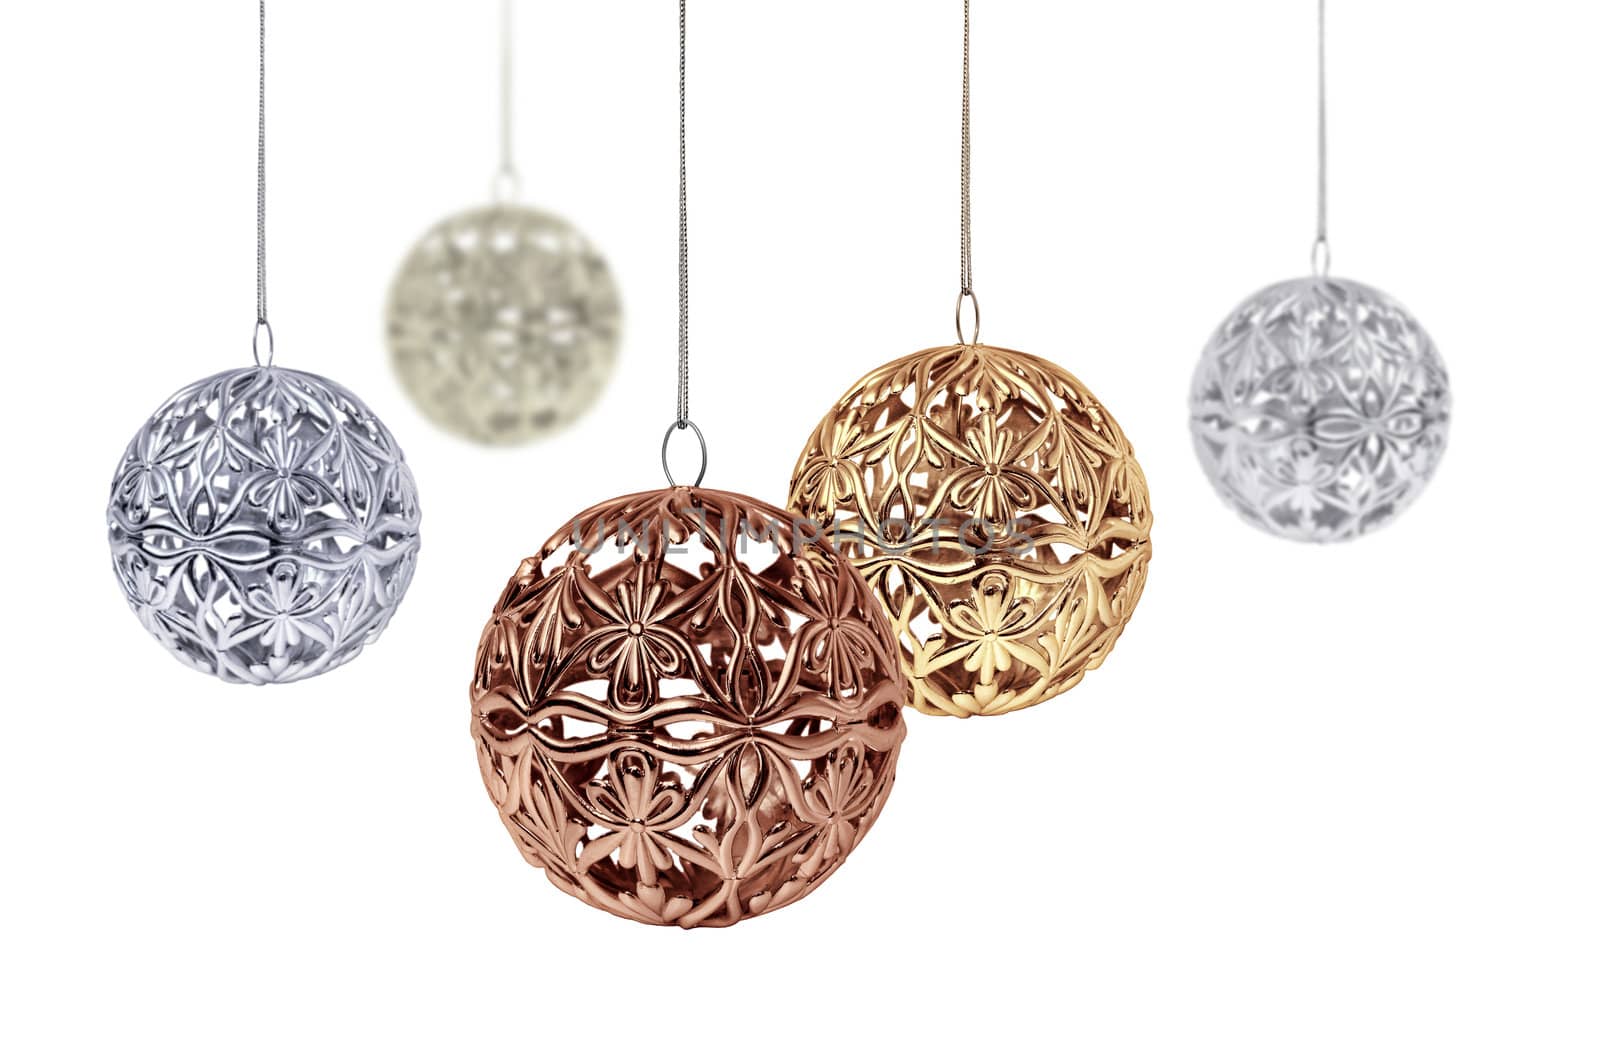 Shiny metal Christmas balls by anterovium